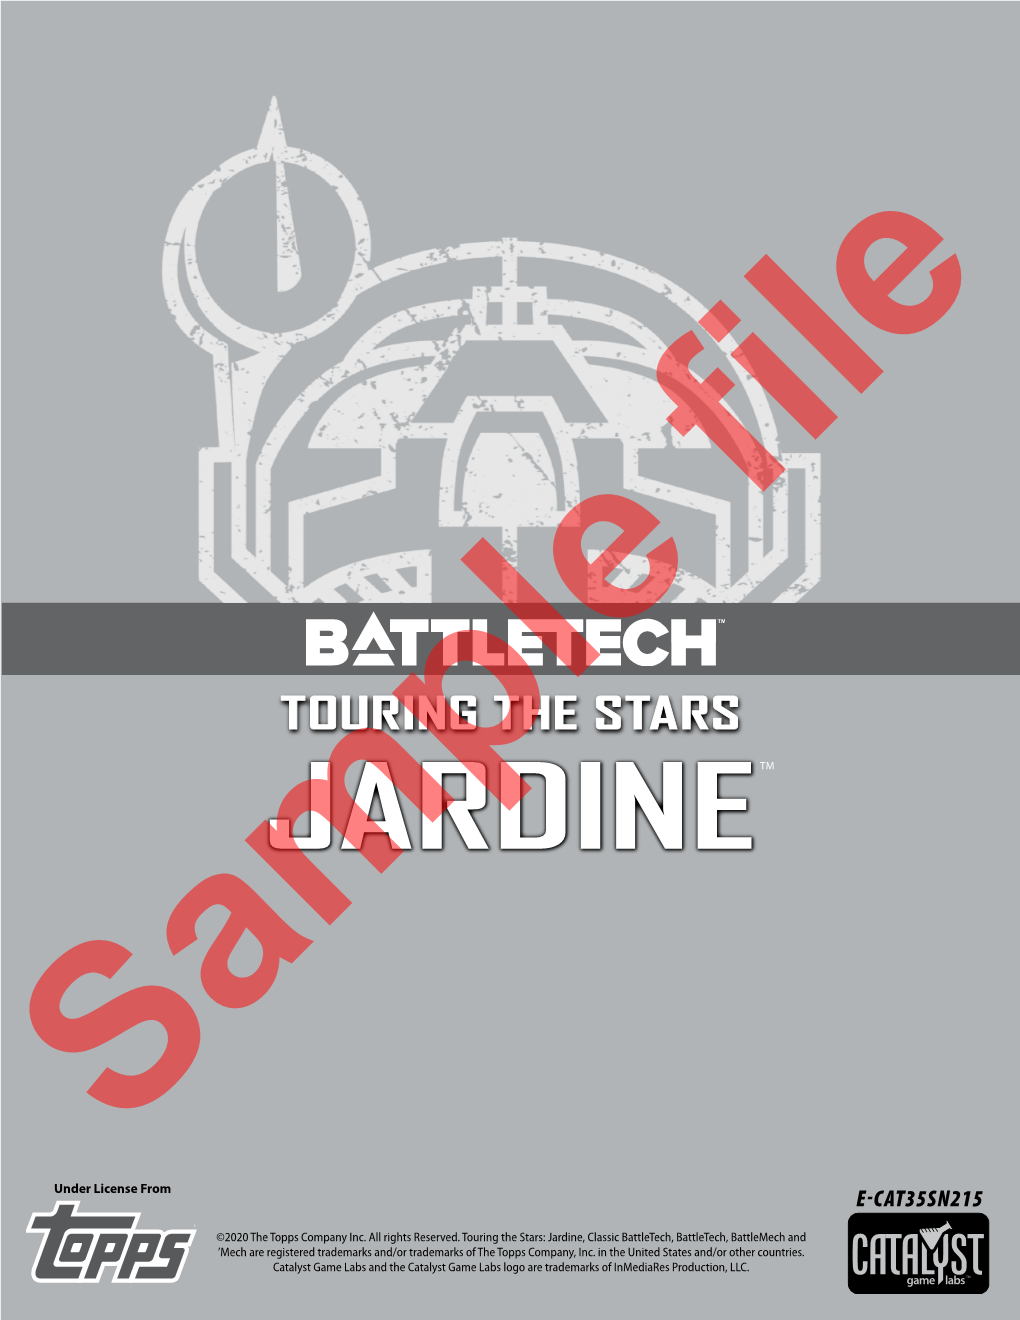 Battletech Touring the Stars: Jardine